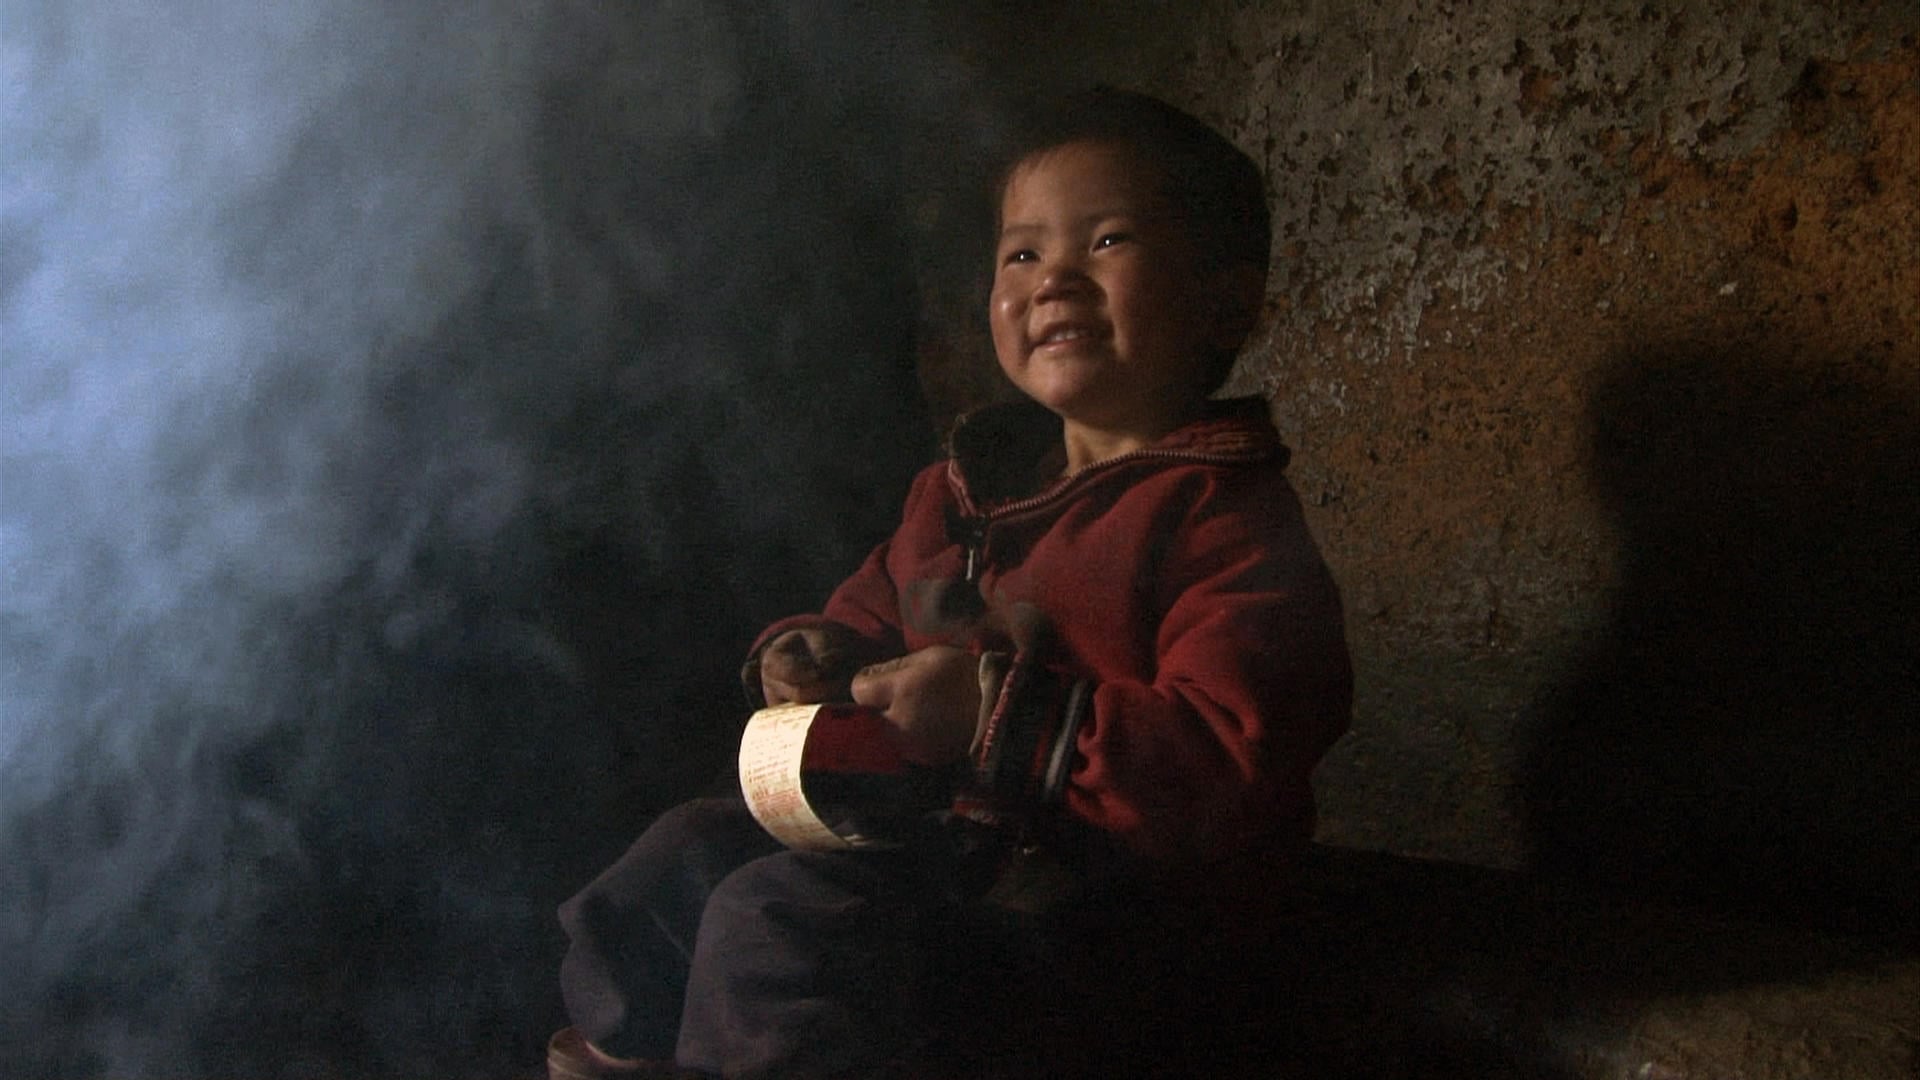 Image du film Les Trois Soeurs du Yunnan hh8xfjwjsw4ttxnxnwx7xn2krjojpg